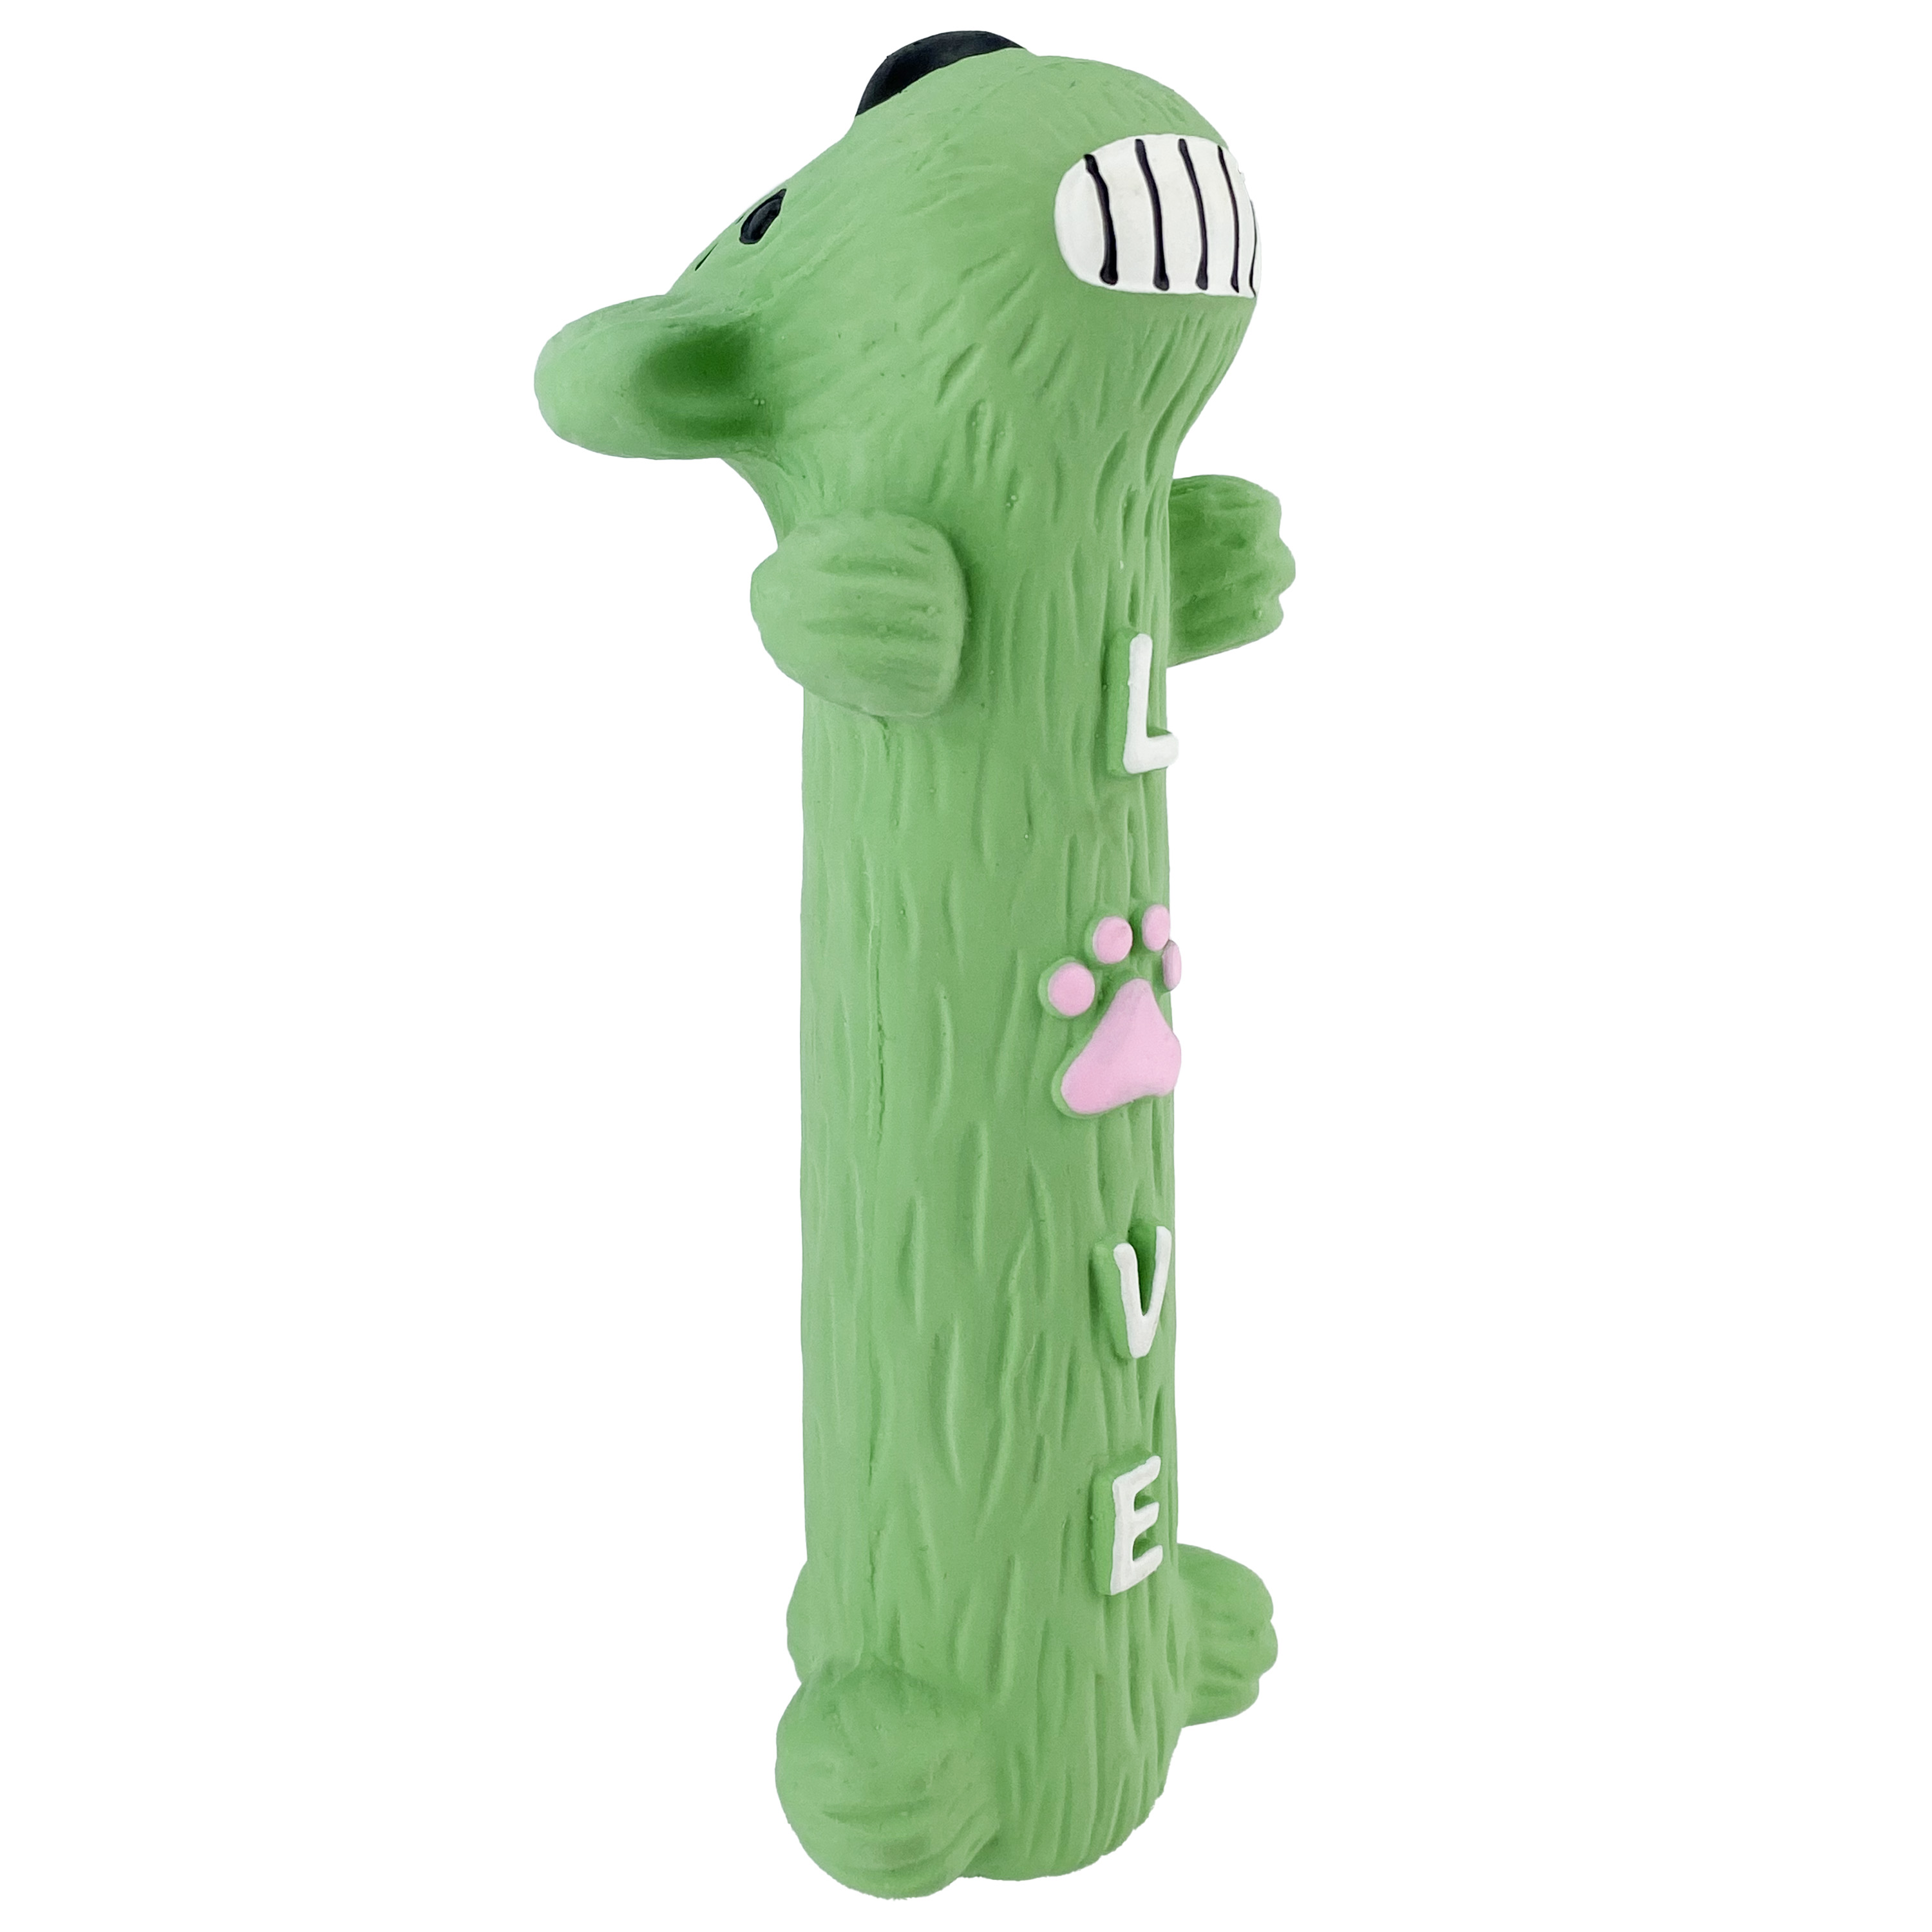 Multipet Loofa Latex Smiling Plush Dog Toy, Green - image 3 of 9